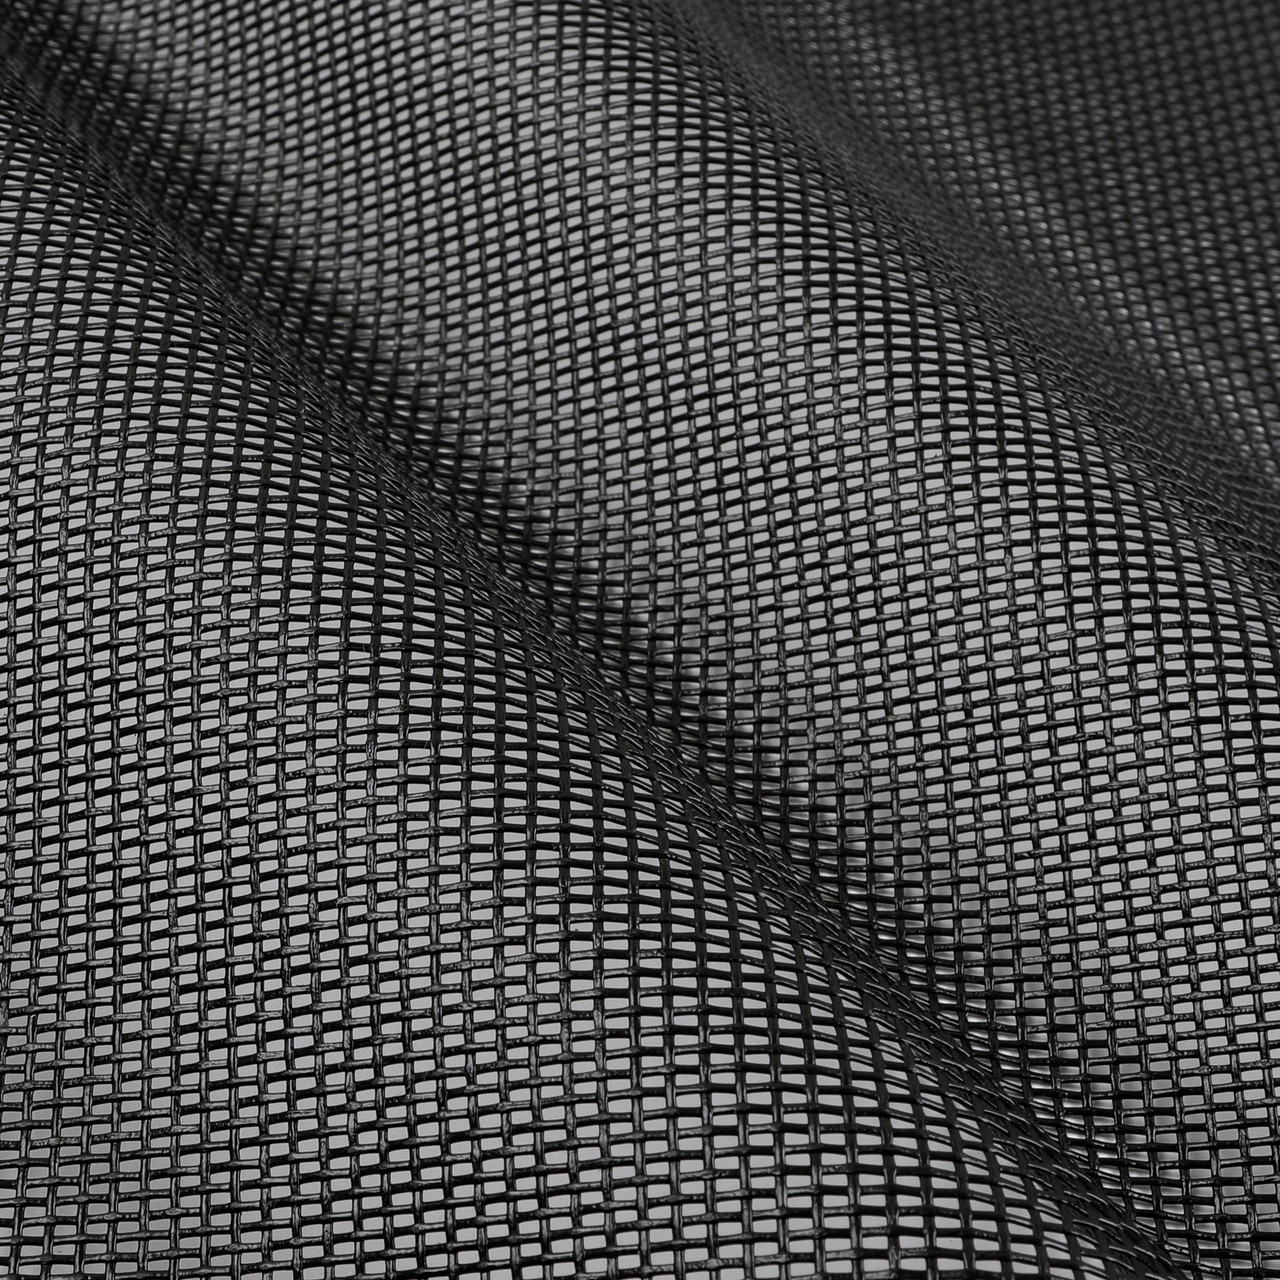 Phifertex Black X04 54-inch Standard Mesh Fabric